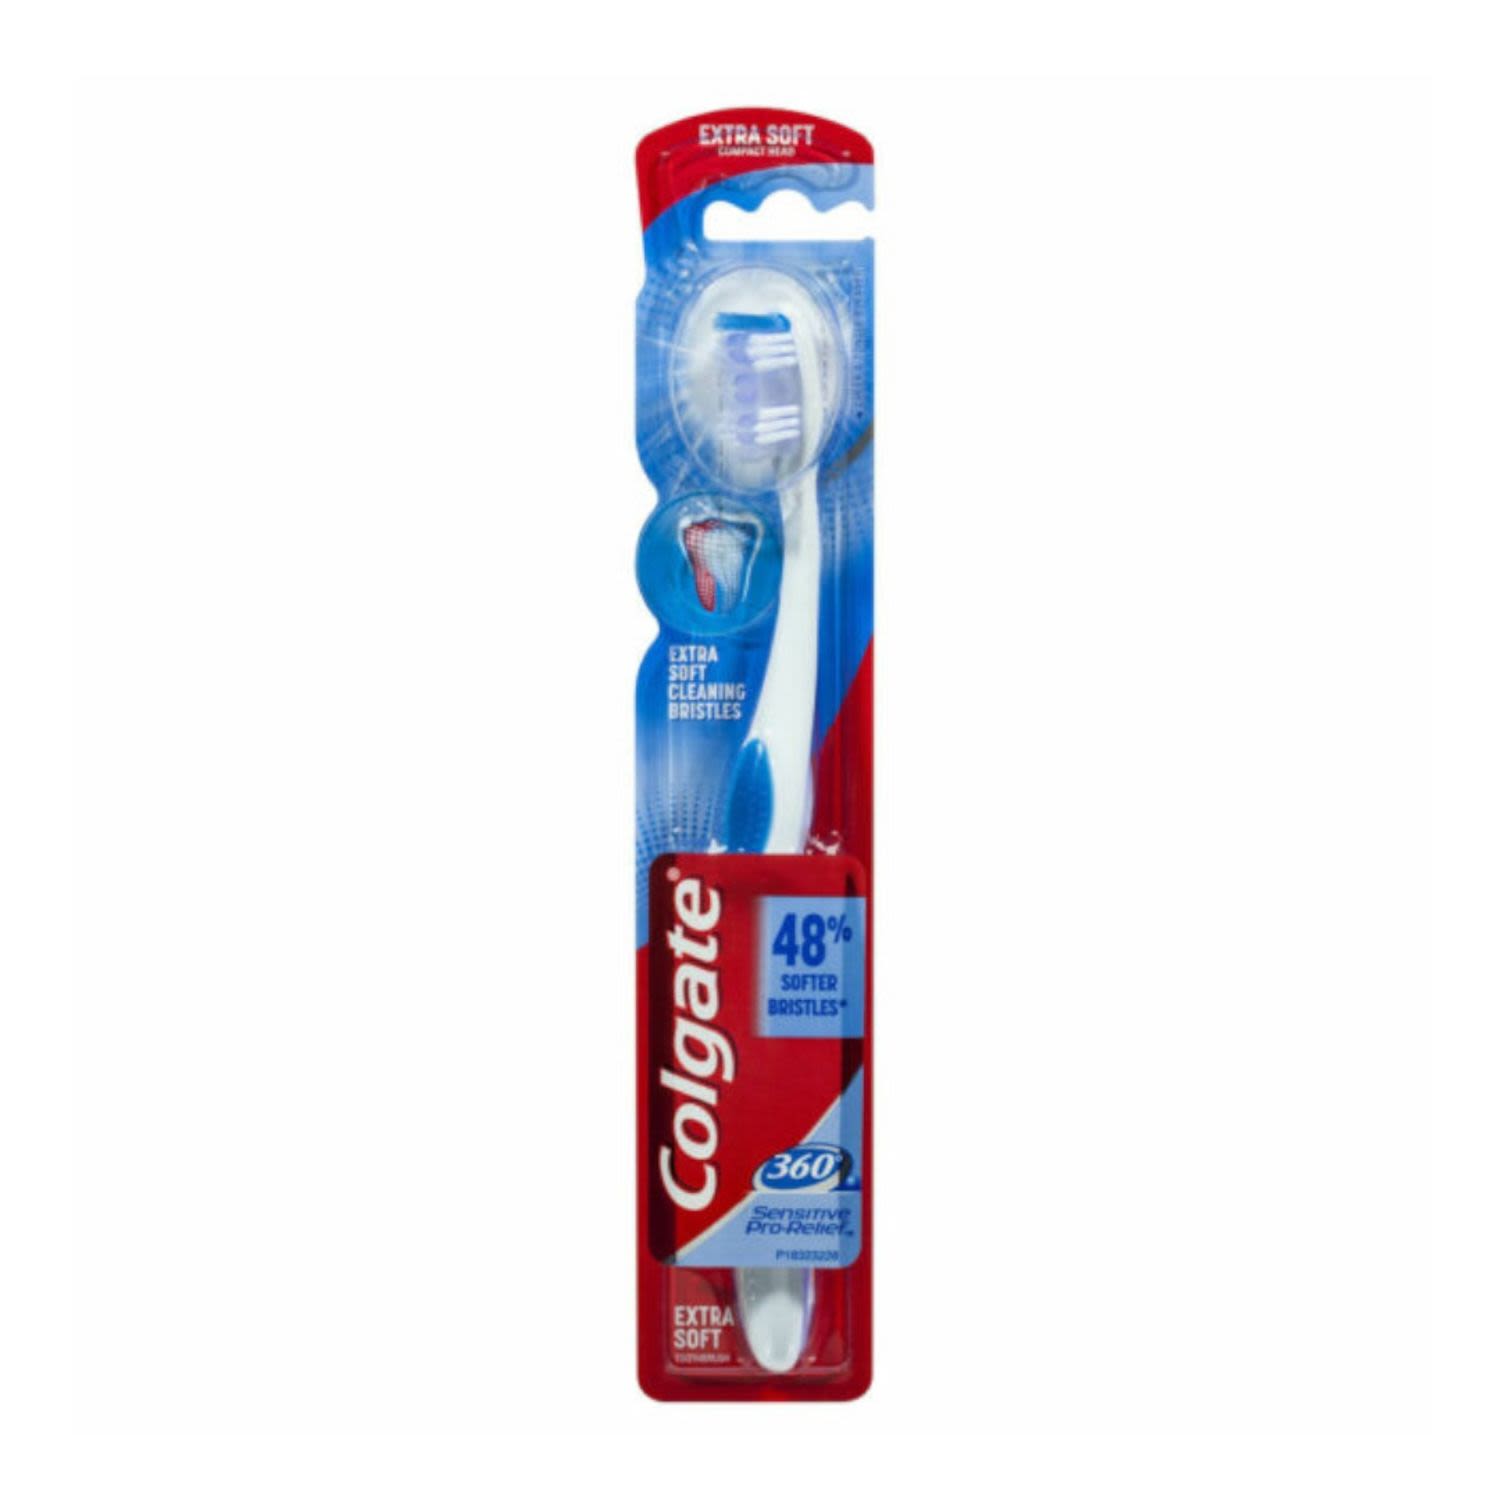 Colgate Toothbrush 360 Degrees Sensitive, 1 Each